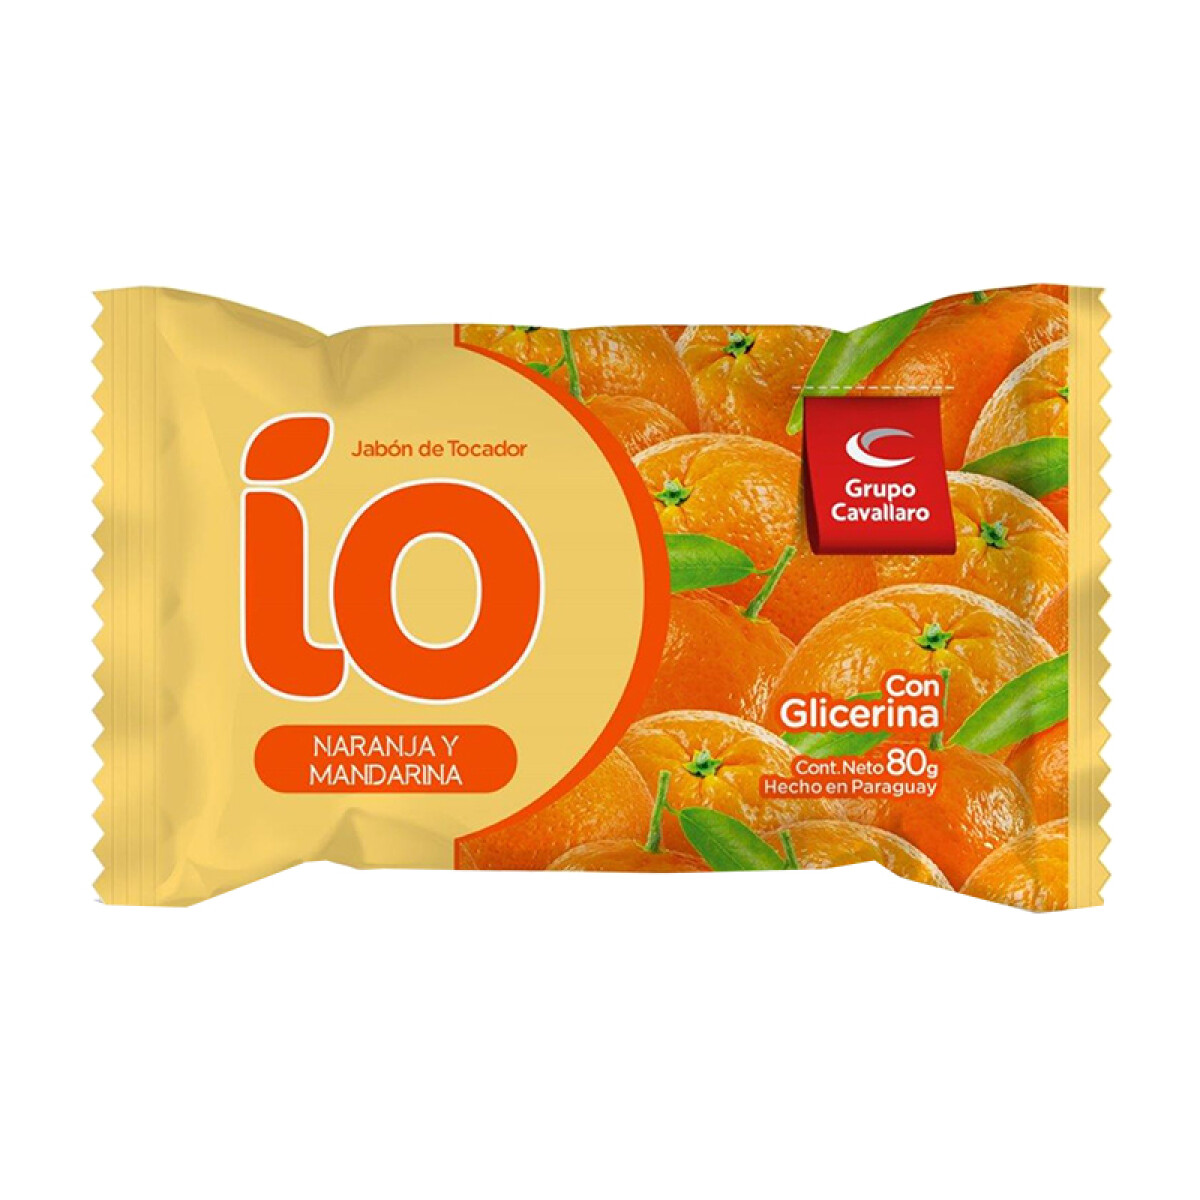 Jabón de Tocador IO 80grs - Naranja y Mandarina 